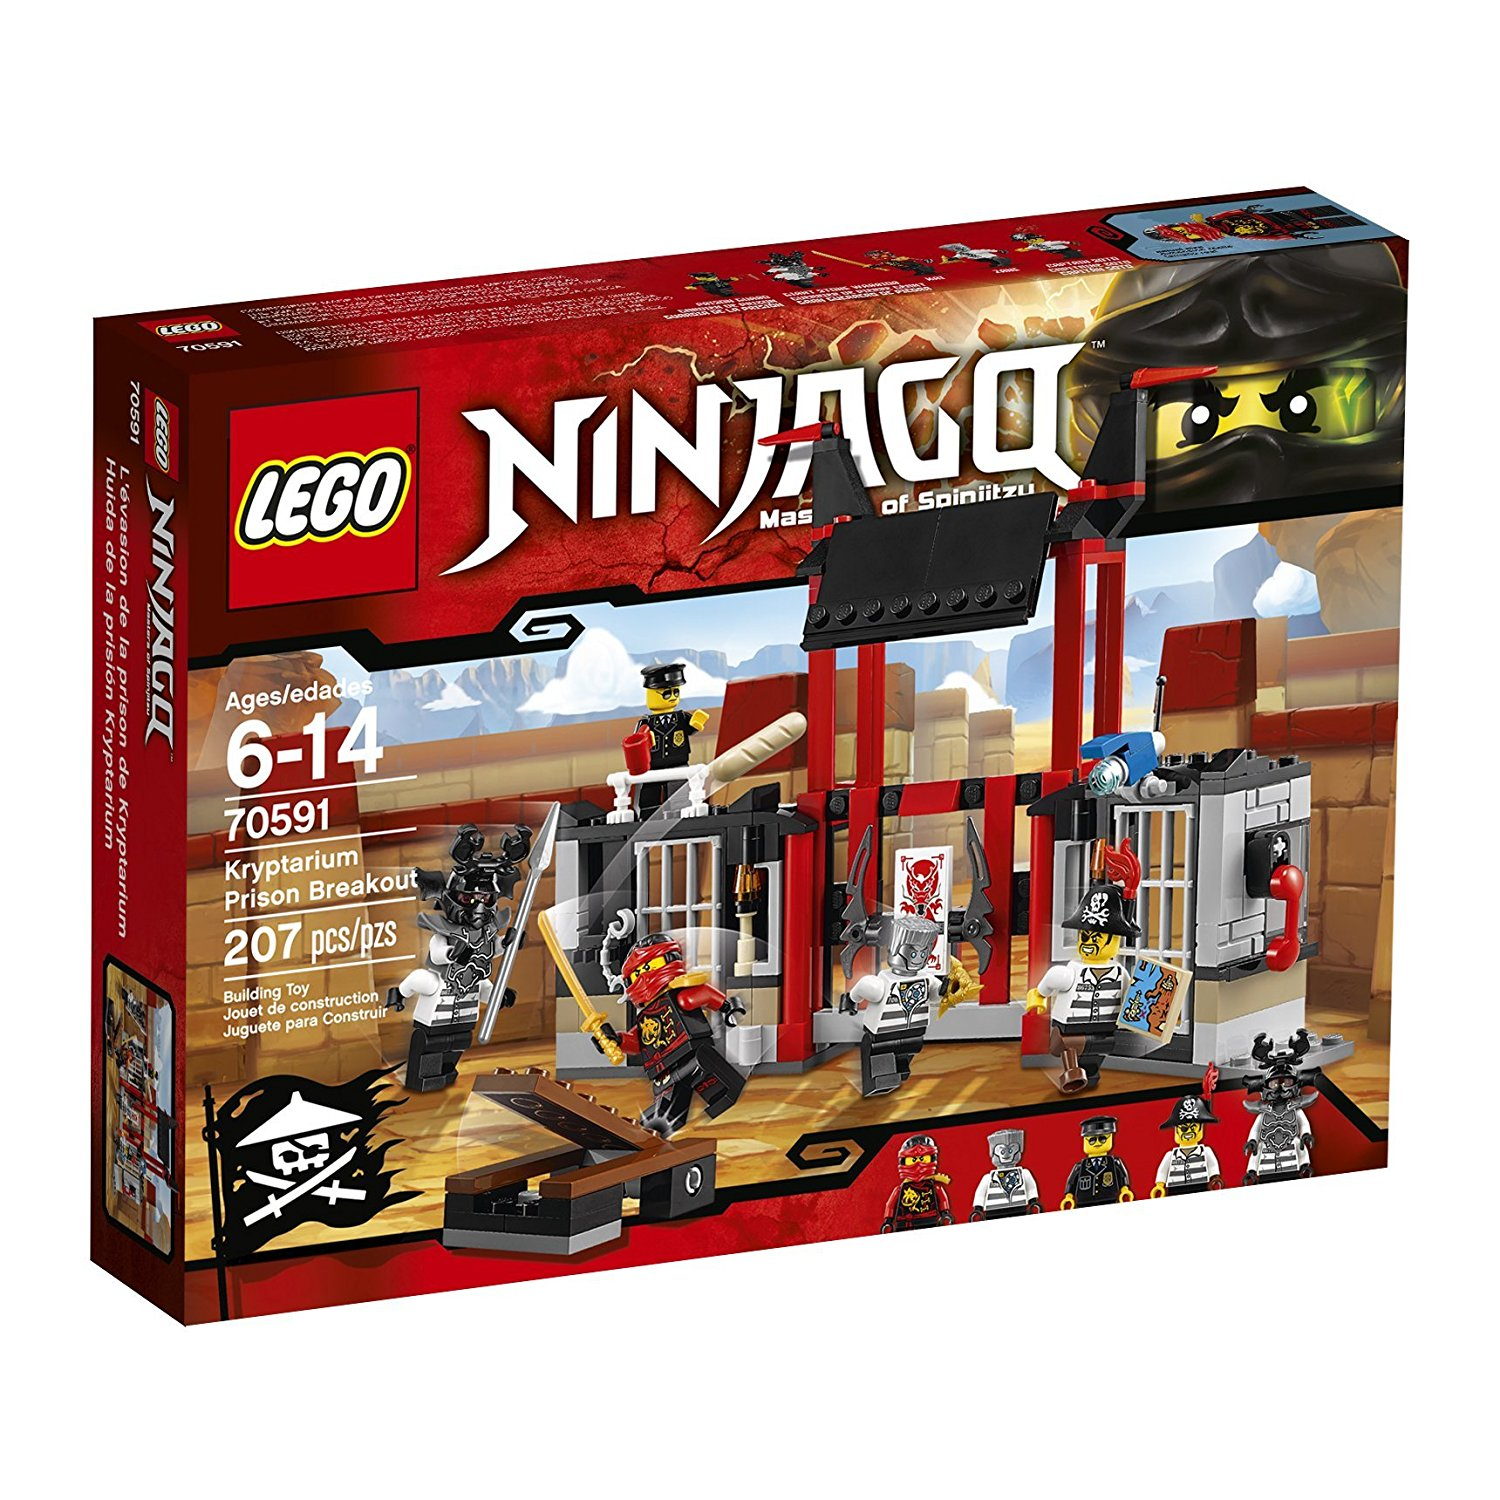 LEGO Ninjago Kryptarium Prison Breakout Building Kit Only $13.99!